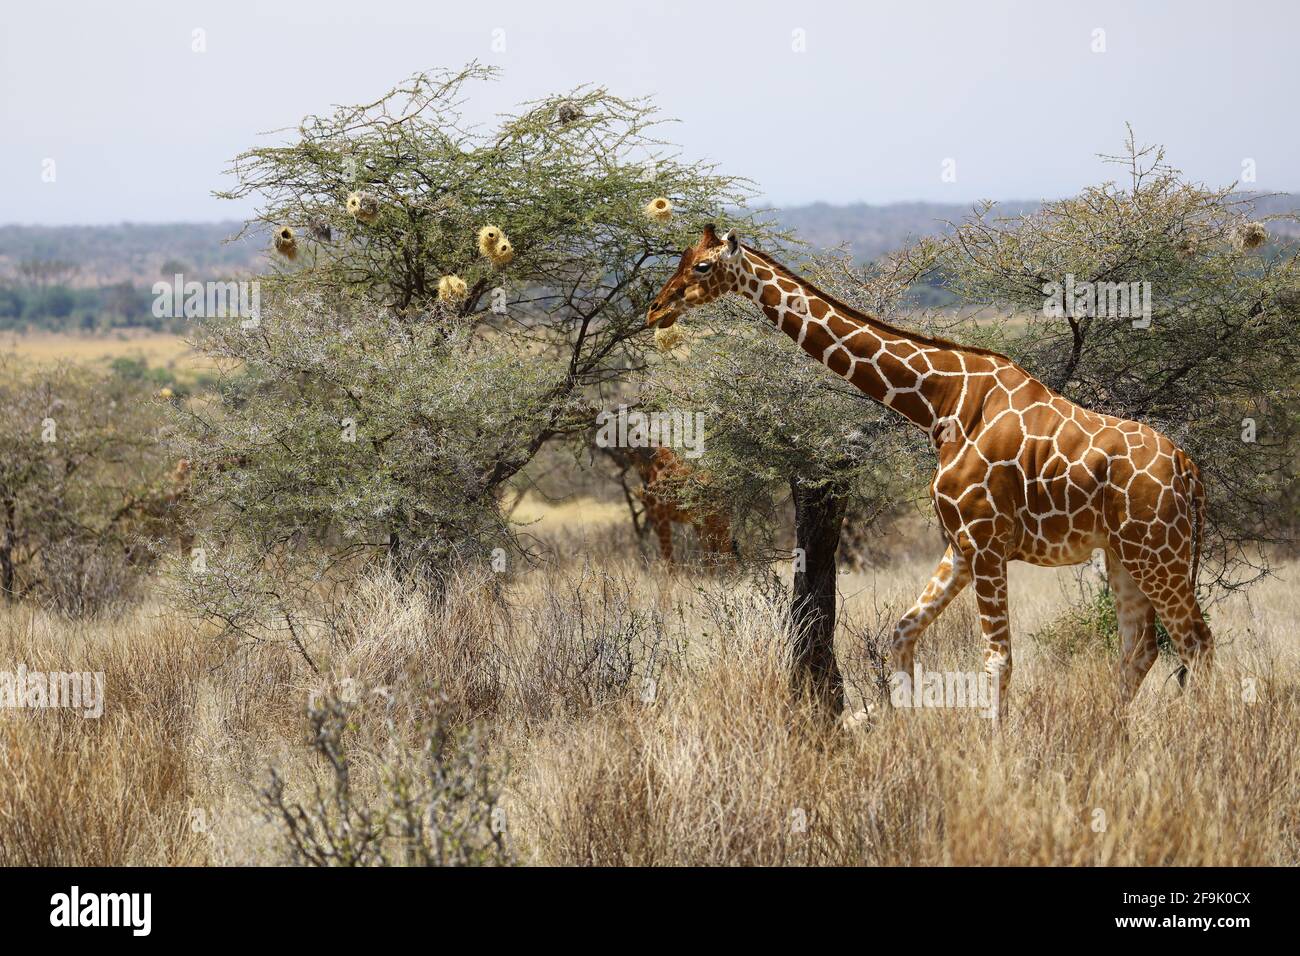 Giraffe beim Essen am Baum Stock Photo